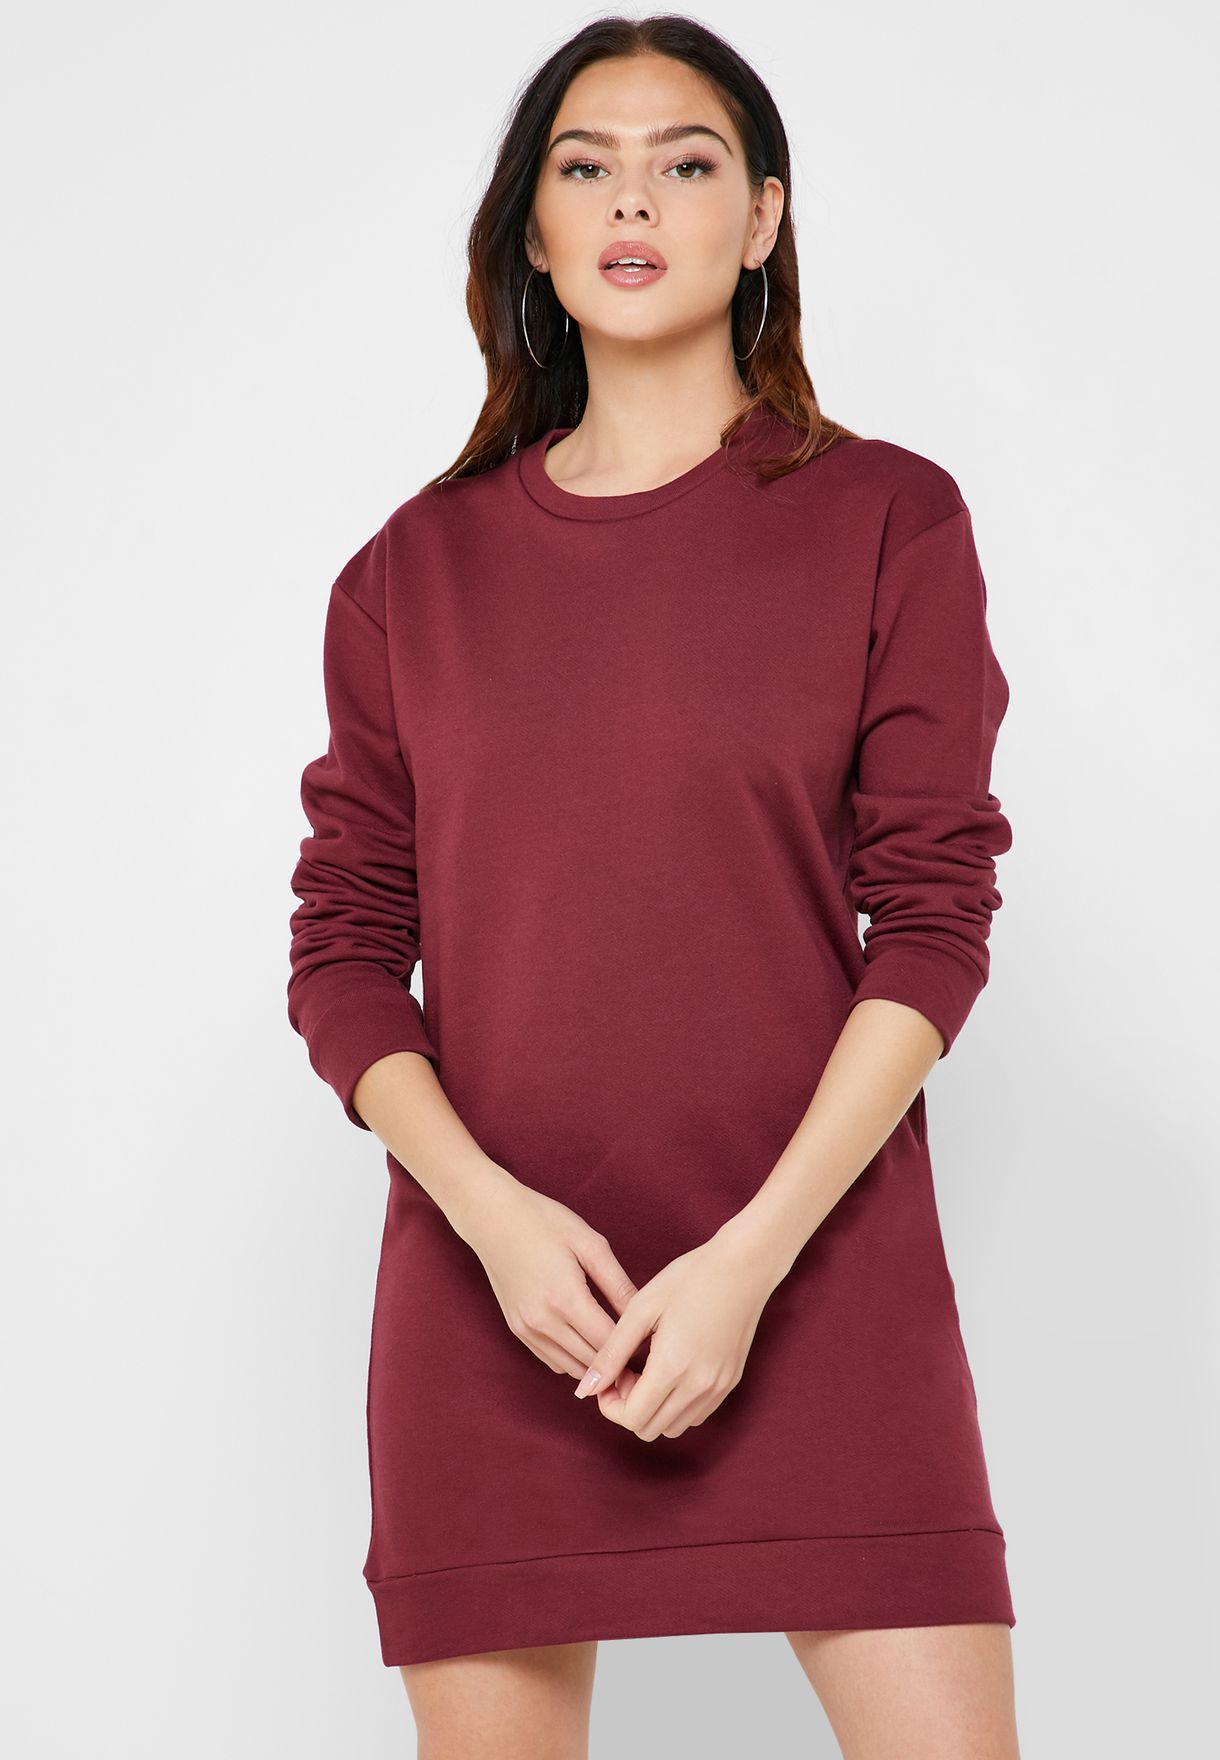 burgundy sweatshirt dress